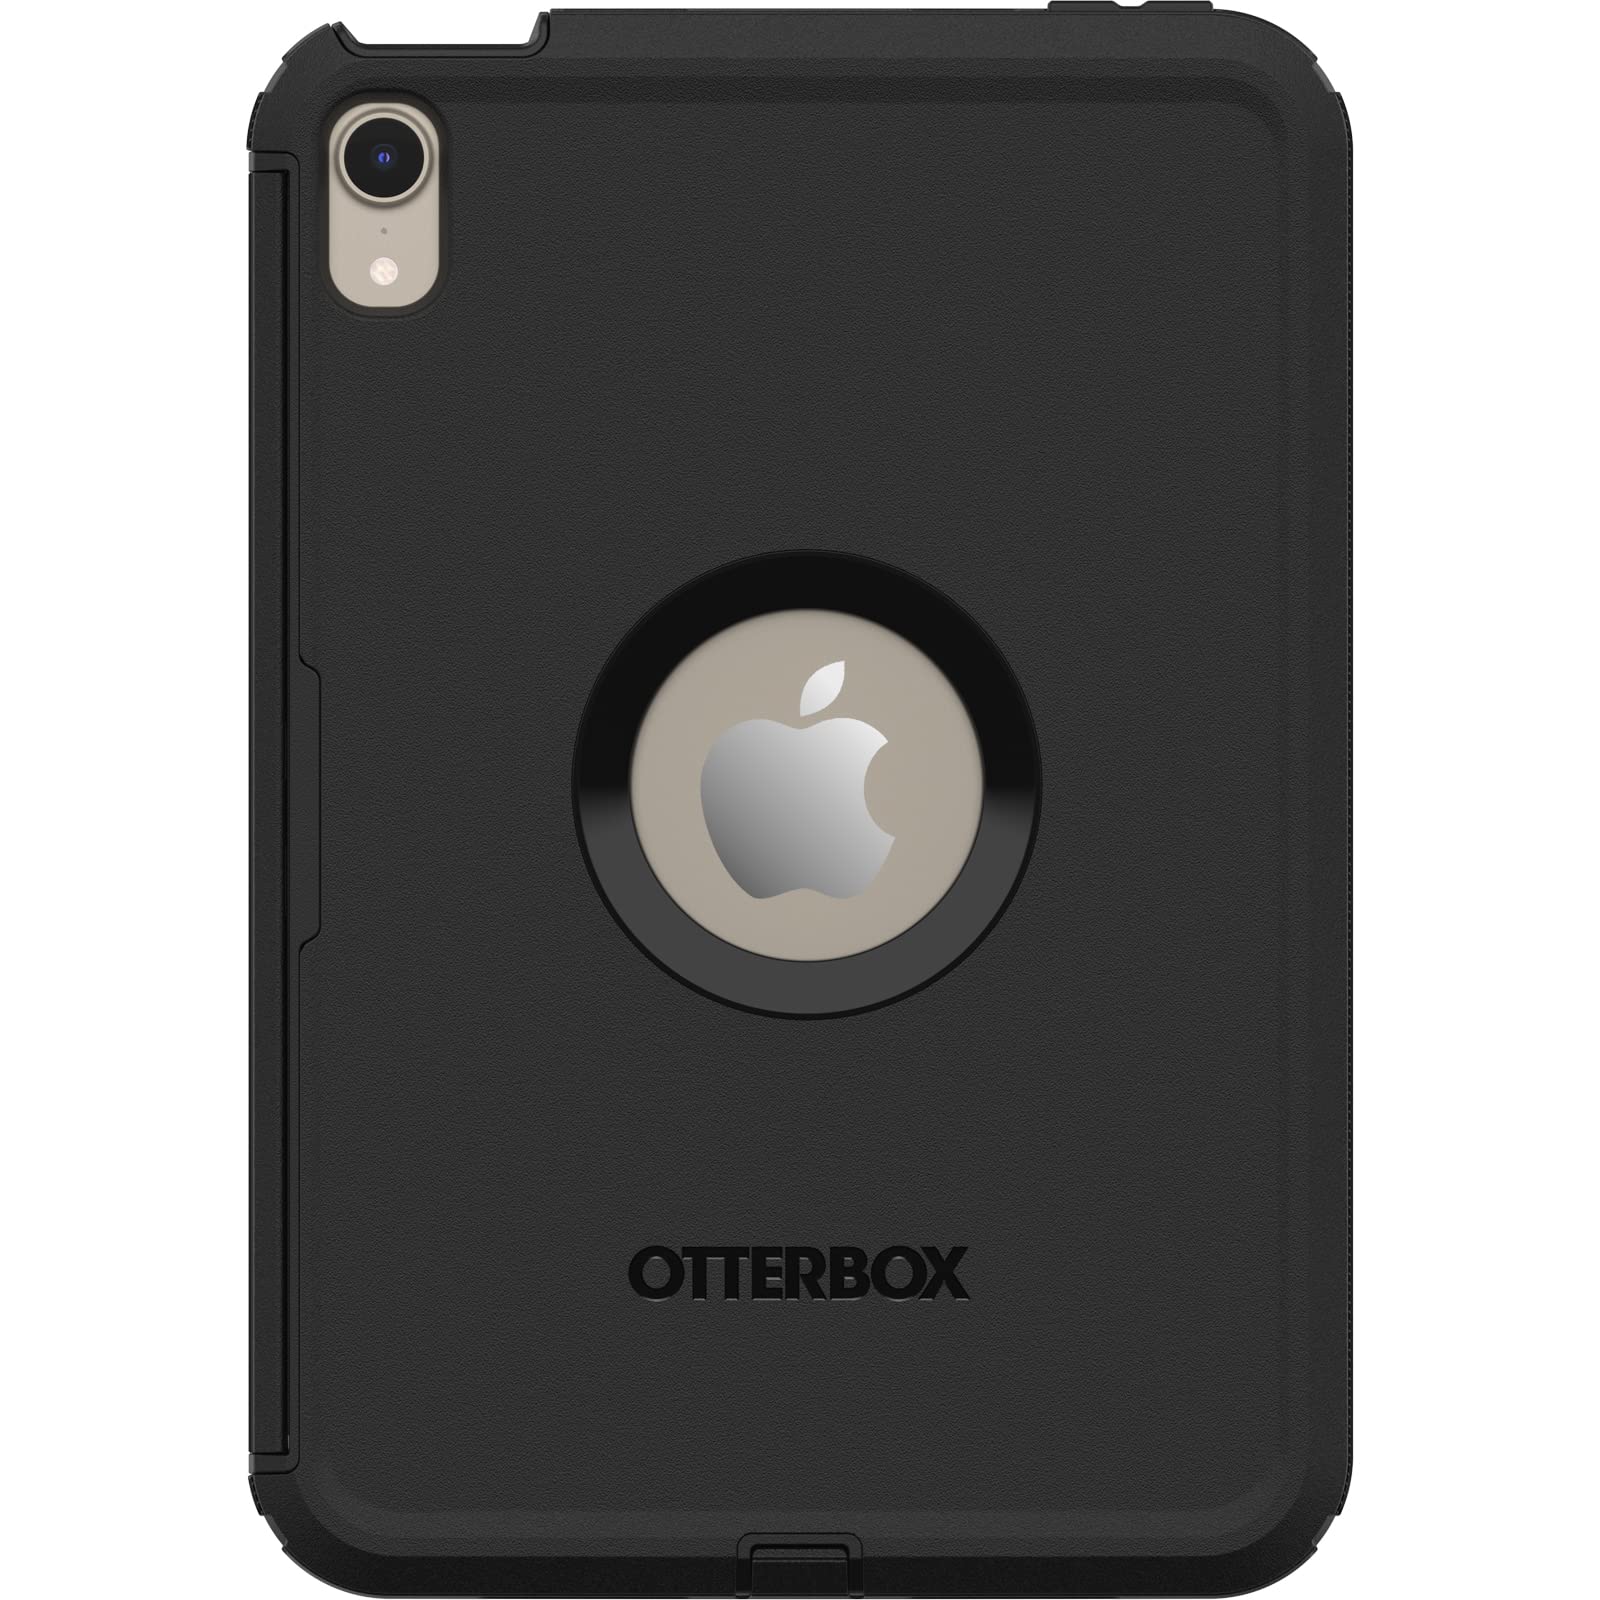 OtterBox DEFENDER SERIES Case for iPad Mini (6TH GEN) - BLACK